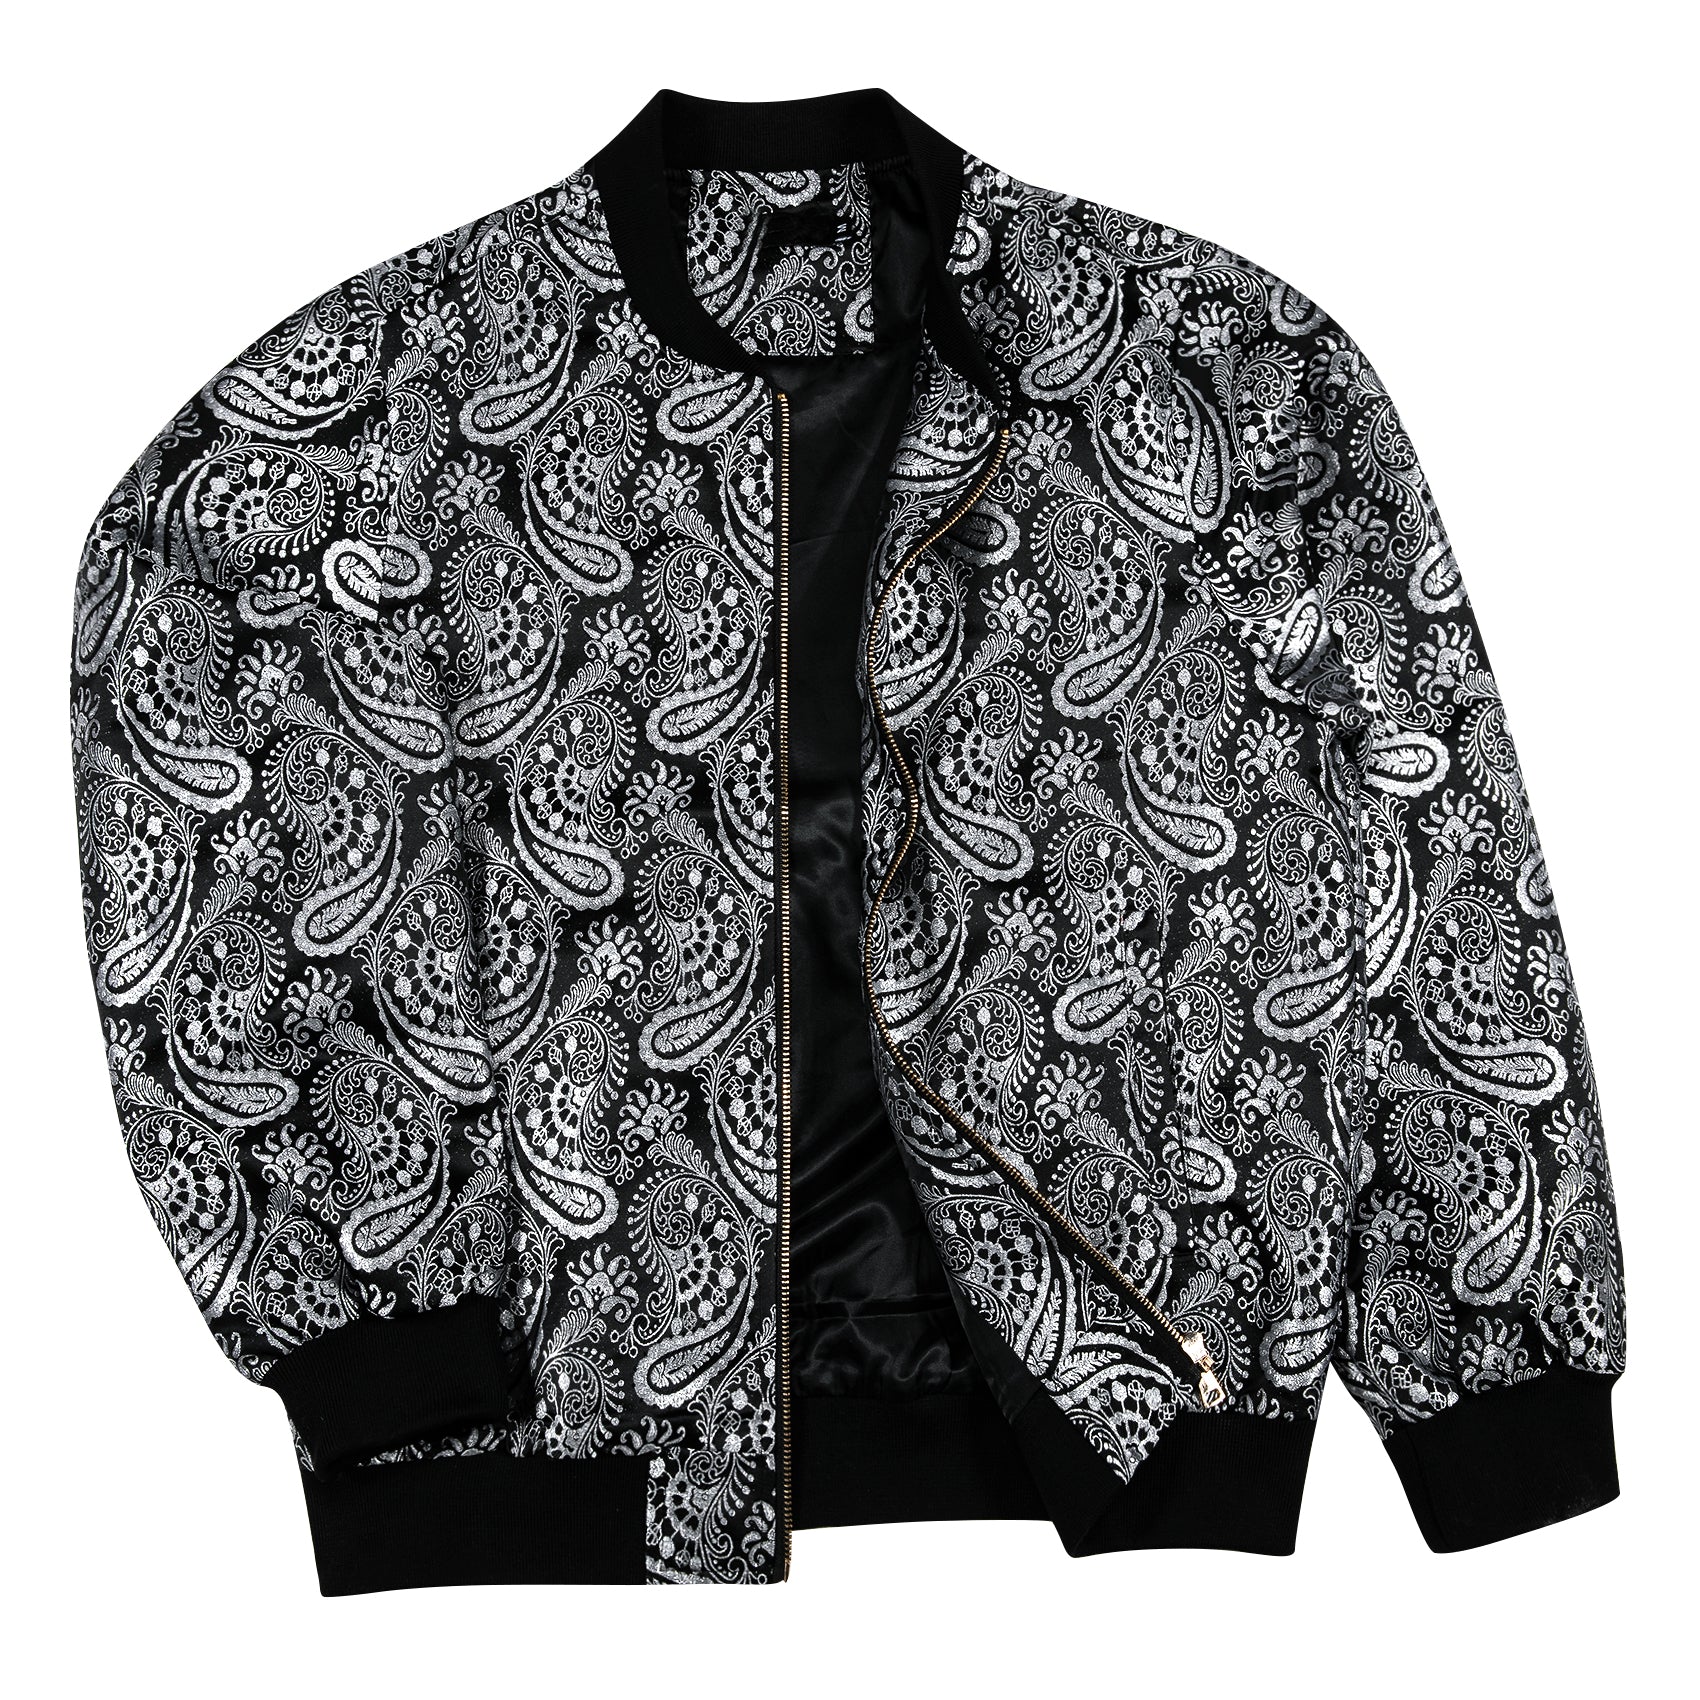 Barry.wang Zipper Jacket Black Silver Floral Jacquard Paisley Jacket for Men